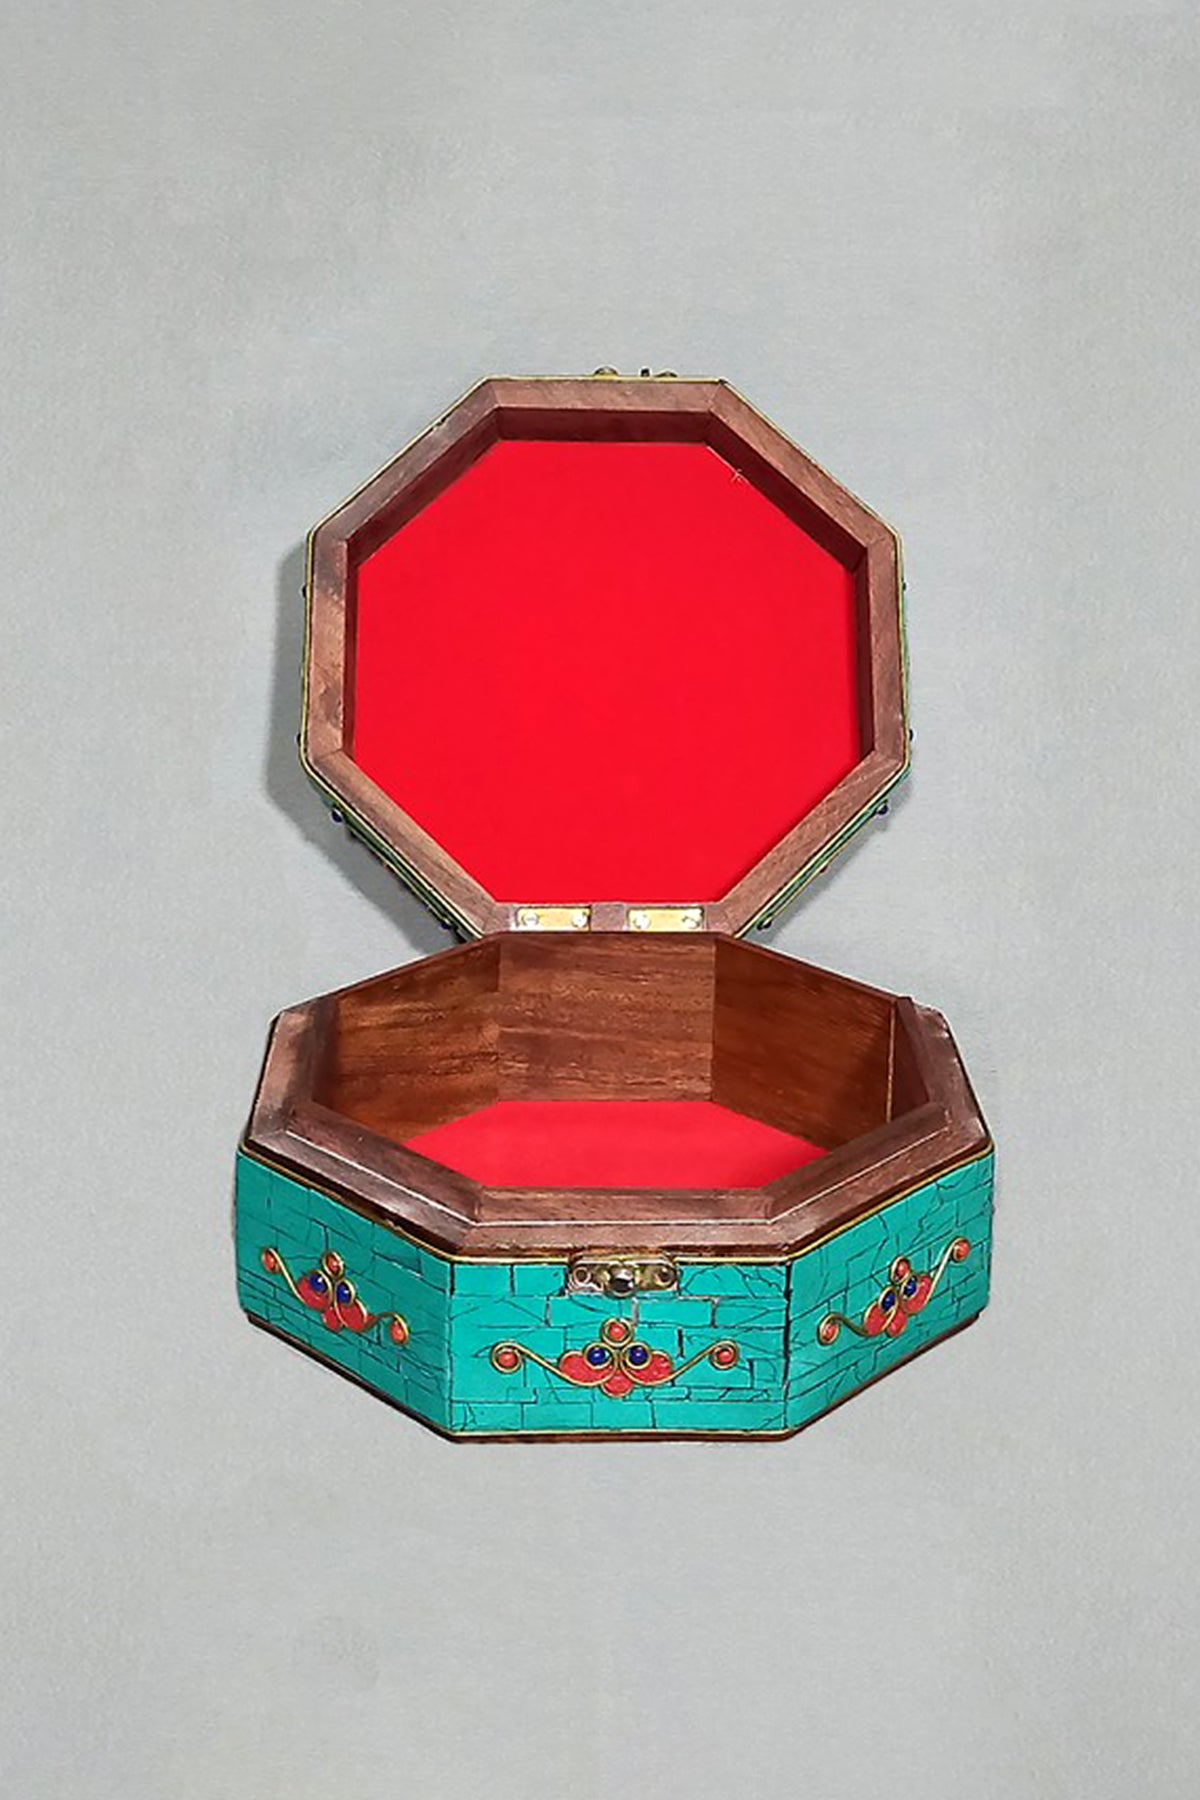 Octagonal shaped Semi Precious Gemstones inlaid Jewelry box